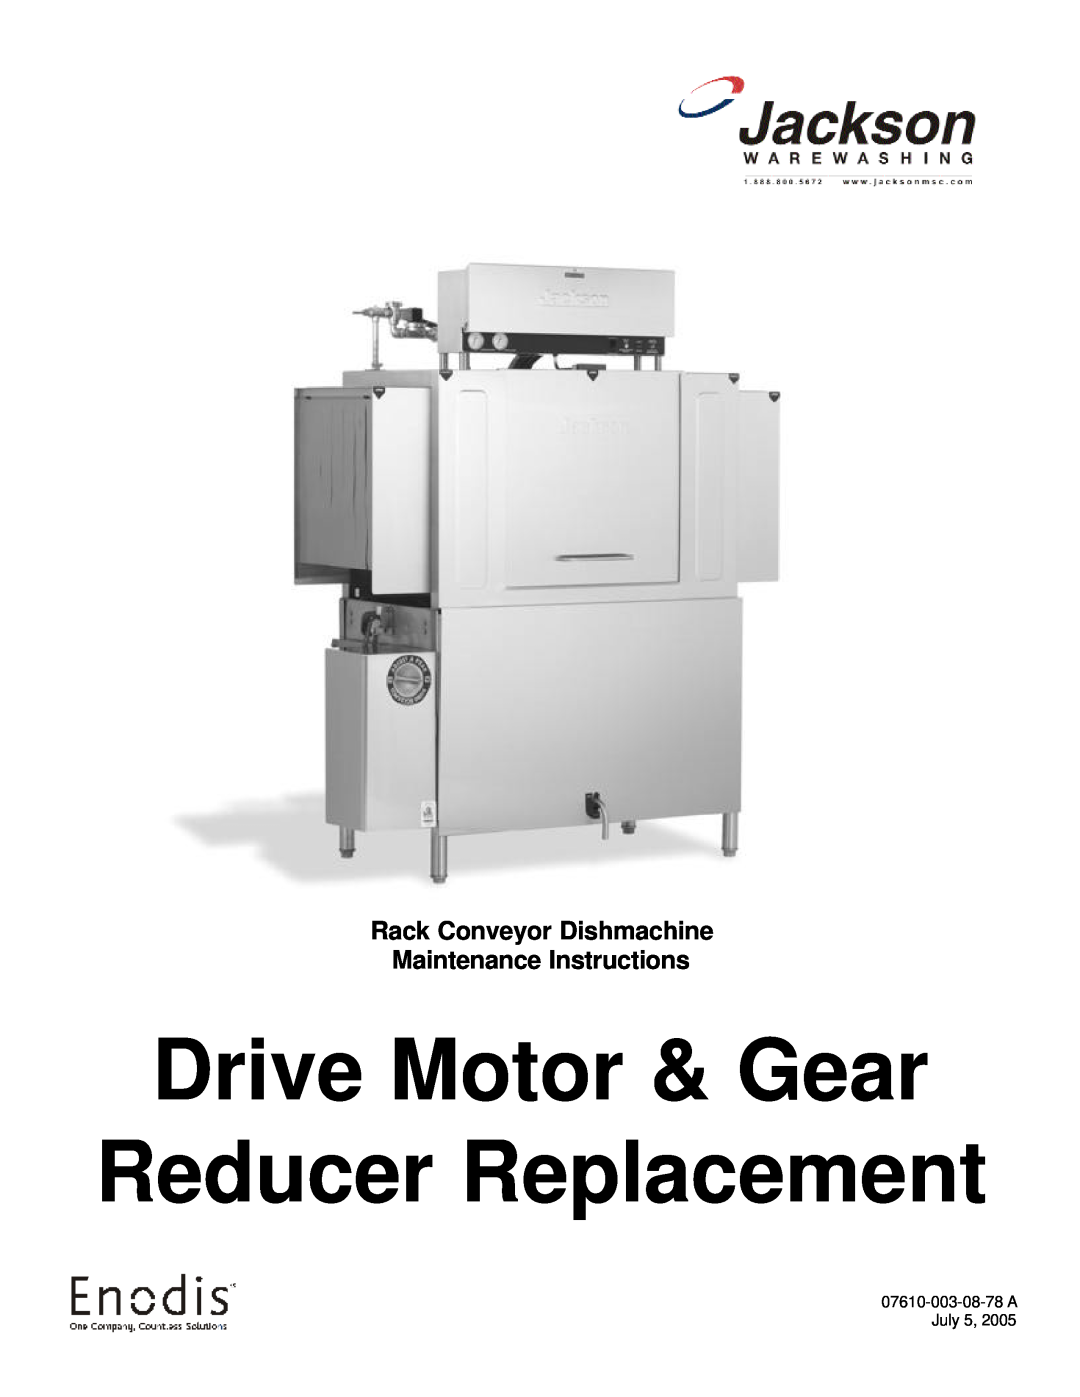 Jackson manual Drive Motor & Gear Reducer Replacement, Rack Conveyor Dishmachine Maintenance Instructions 